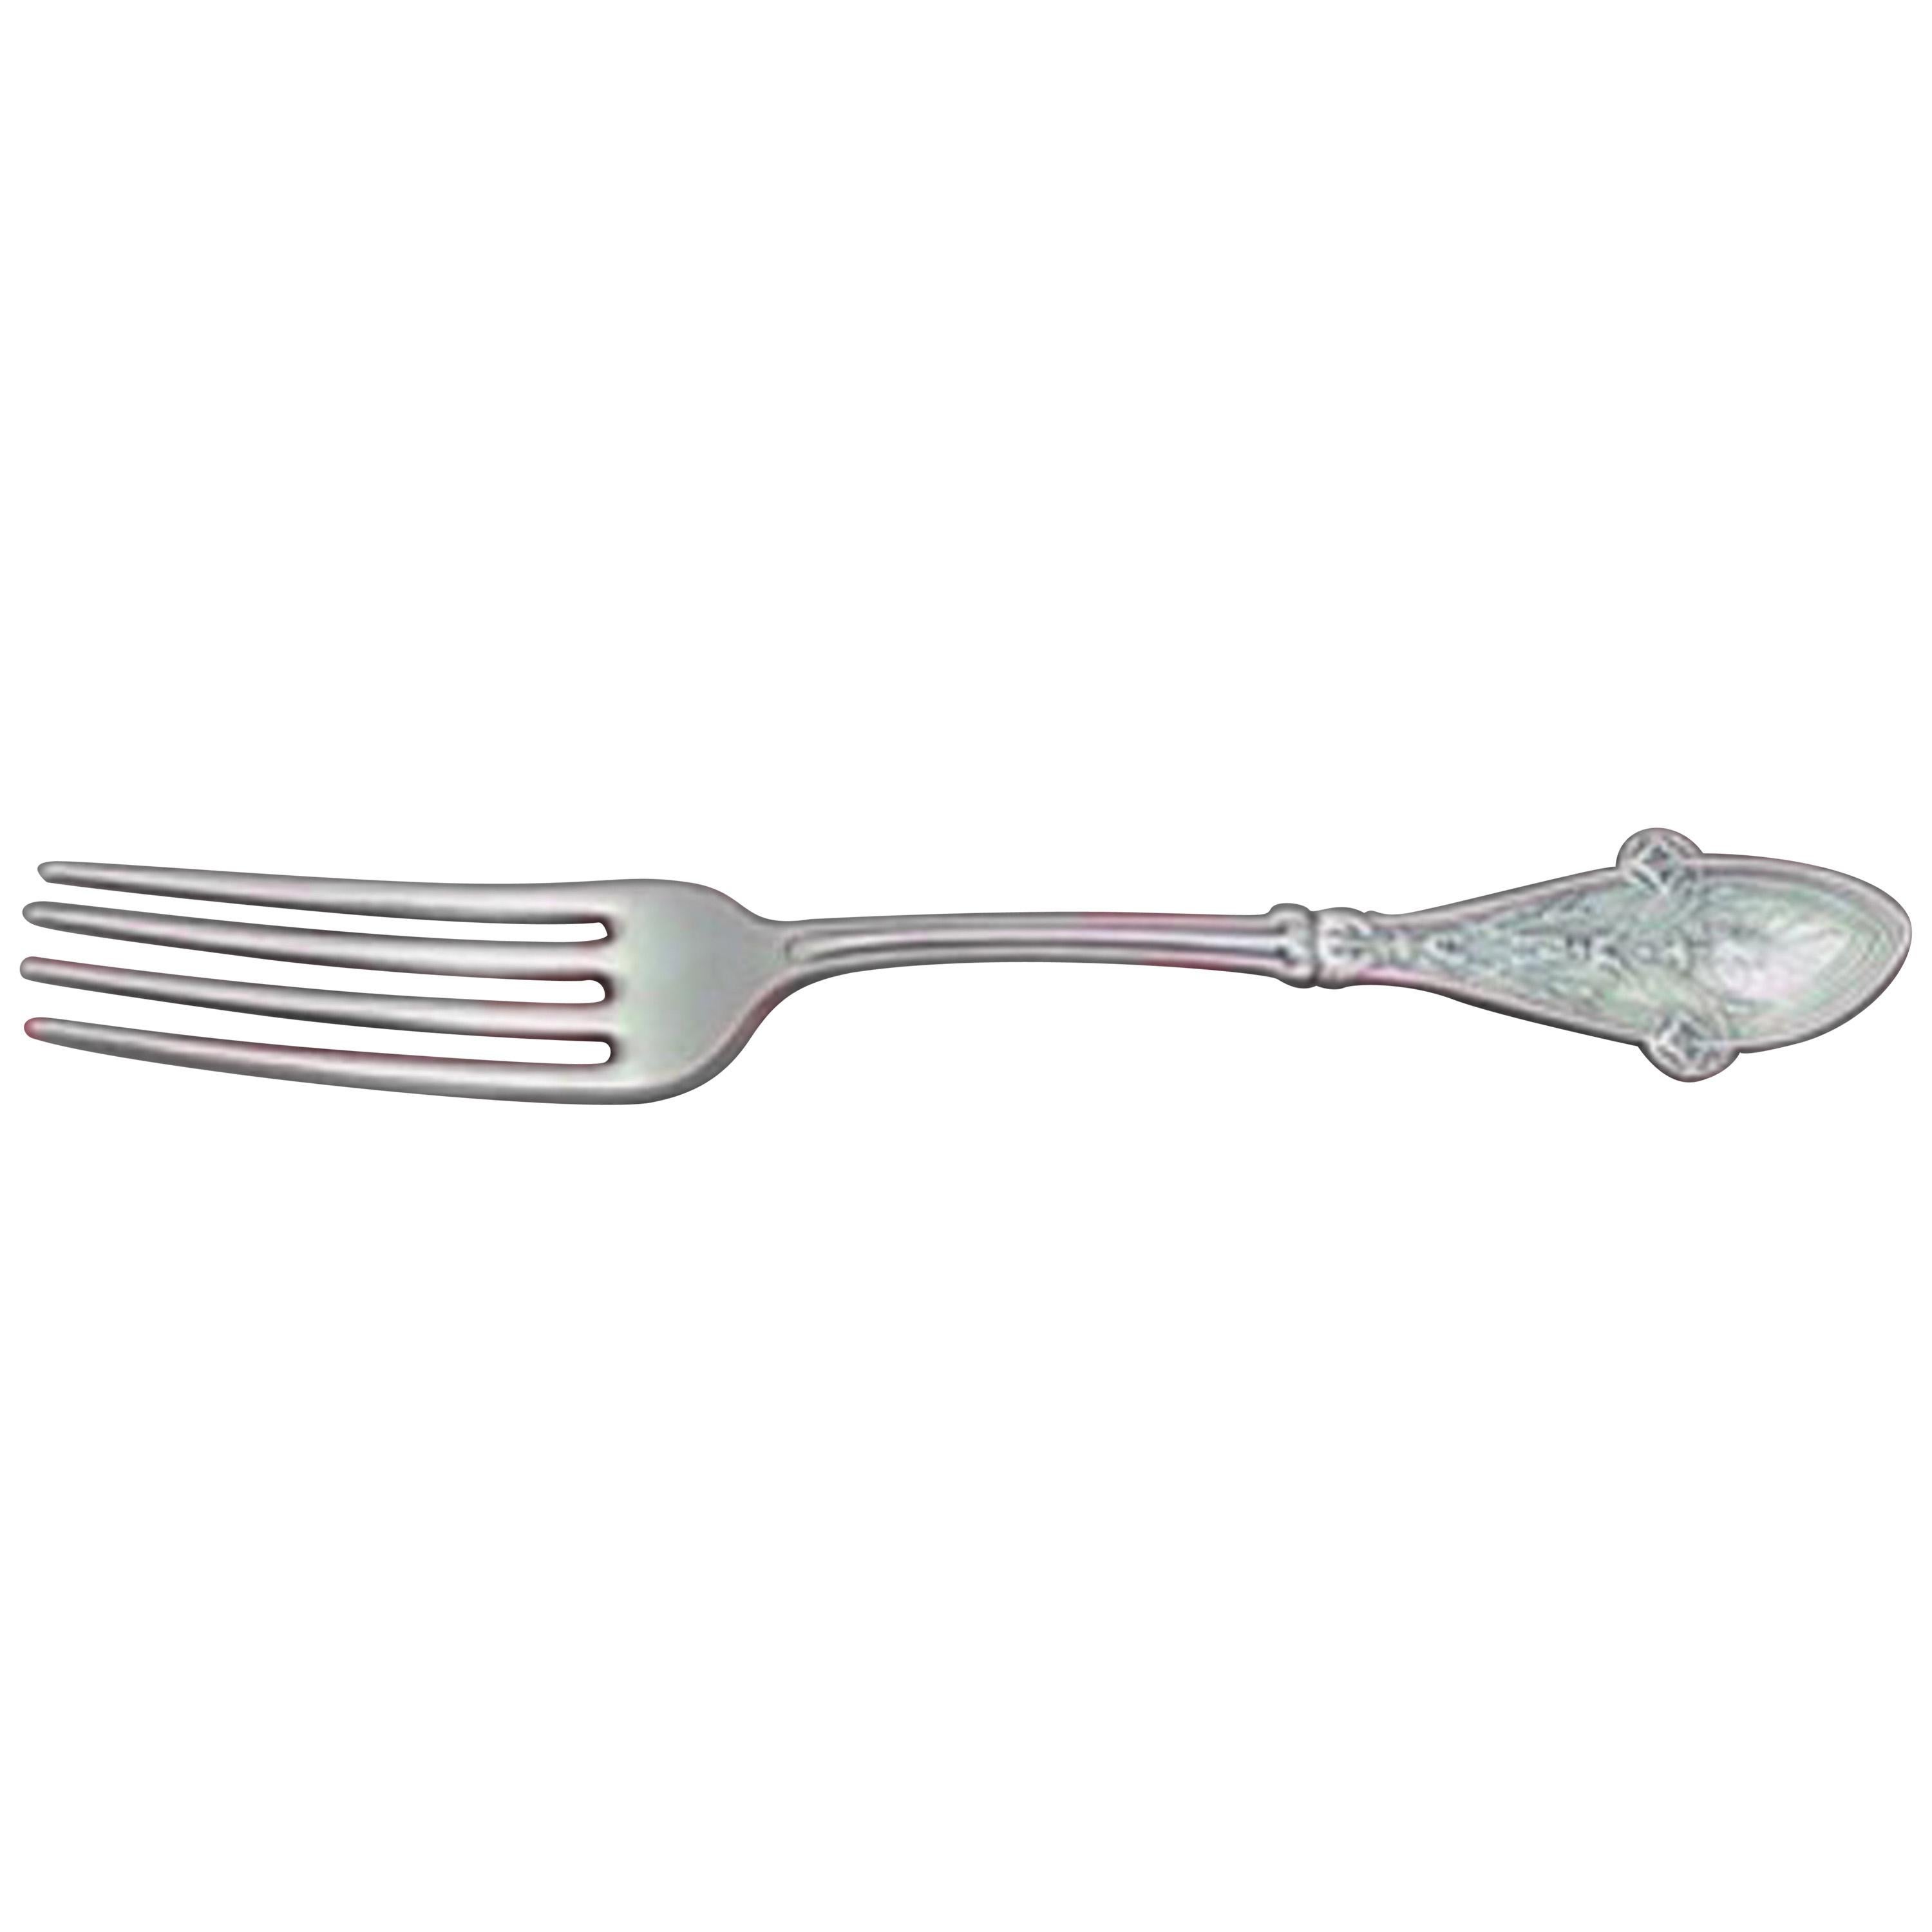 Italian by Tiffany & Co. Sterling Silver Regular Fork